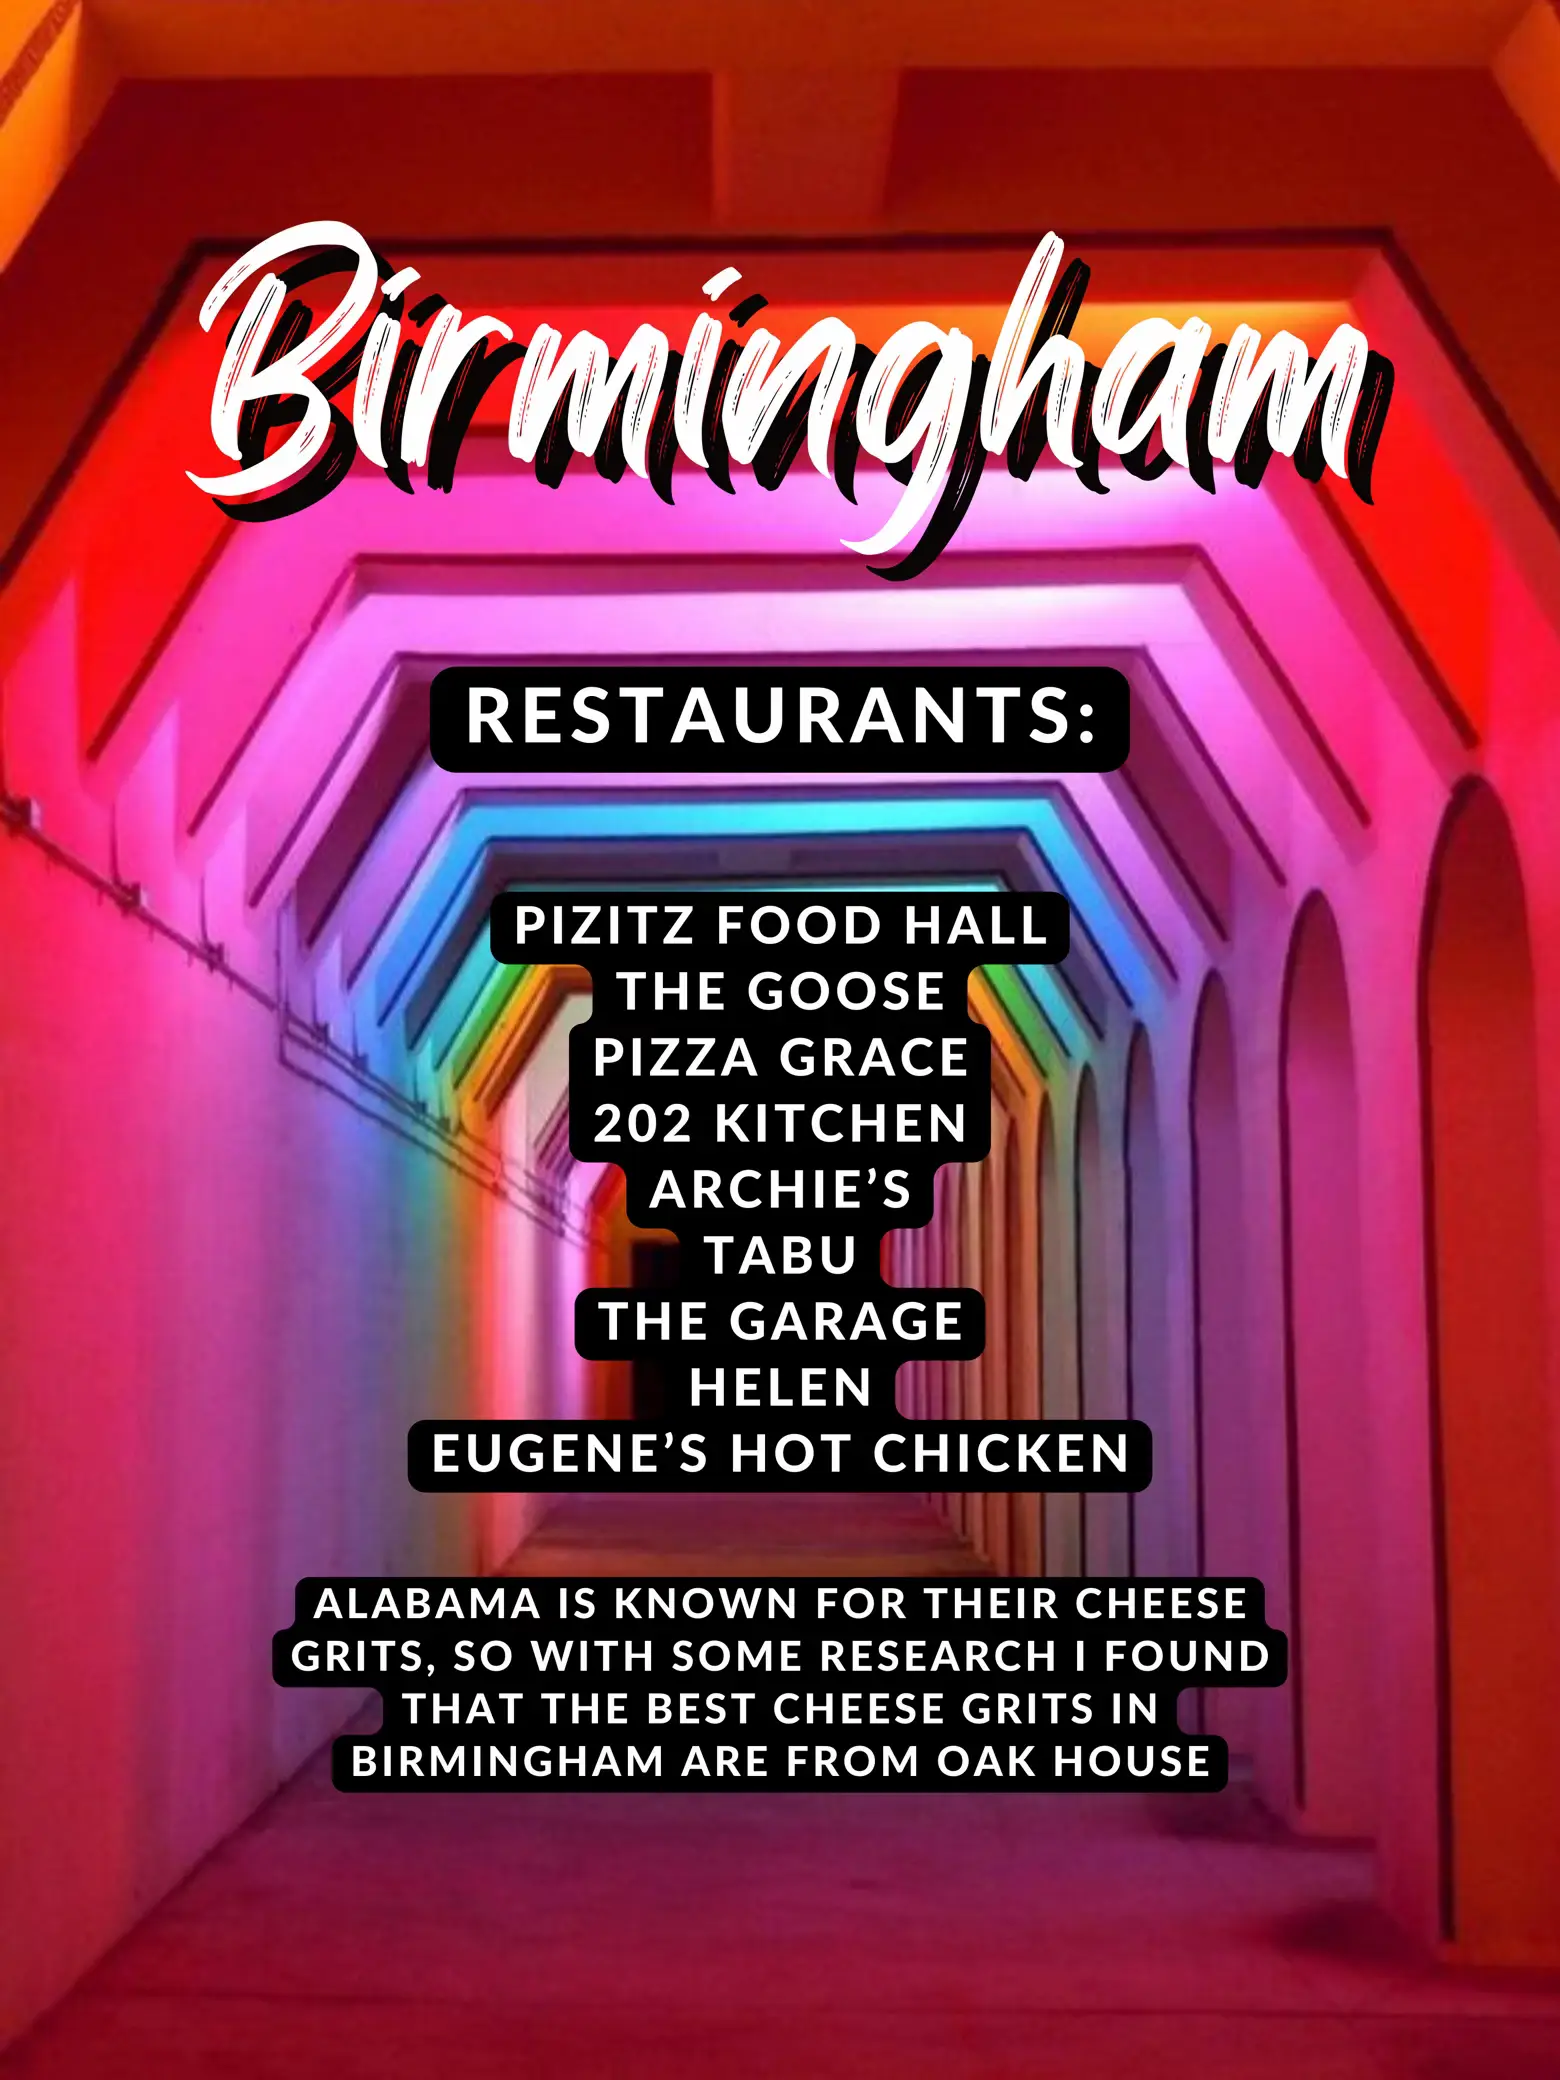  A list of restaurants in Birmingham, Al.